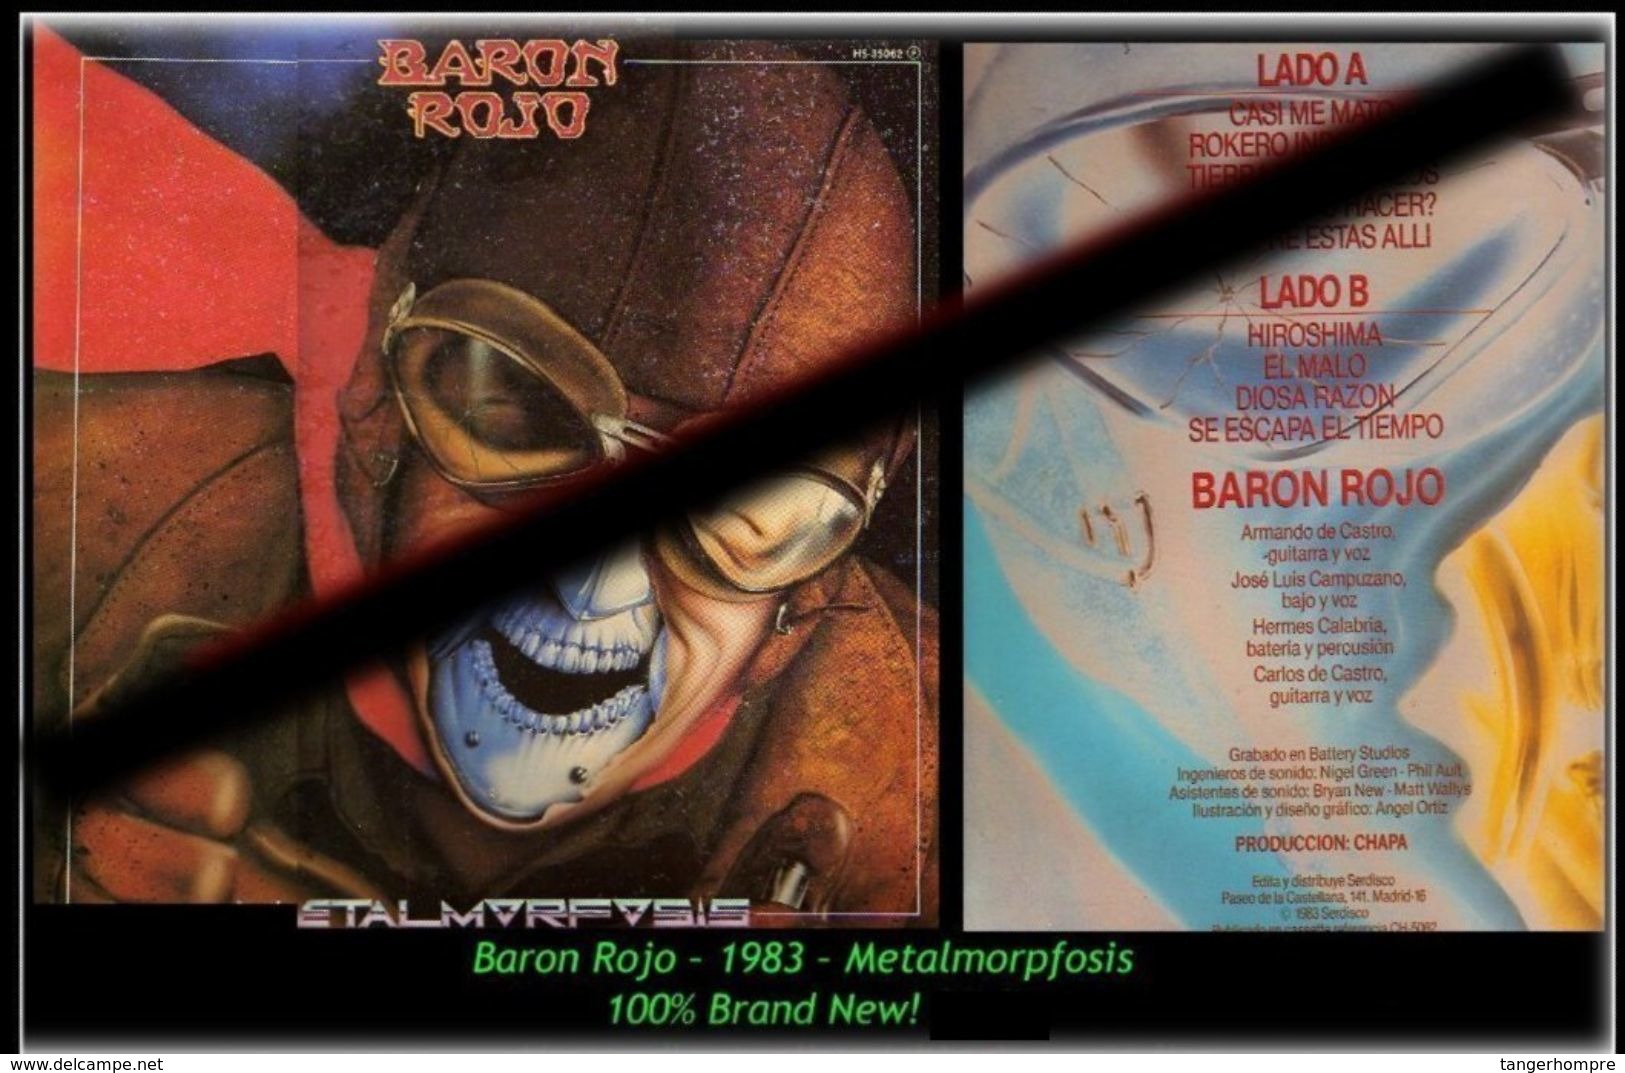 Baron Rojo - Metalmorpfosis - Neue LP Von 1983 - 100 % Brand New -RRR- - Hard Rock & Metal